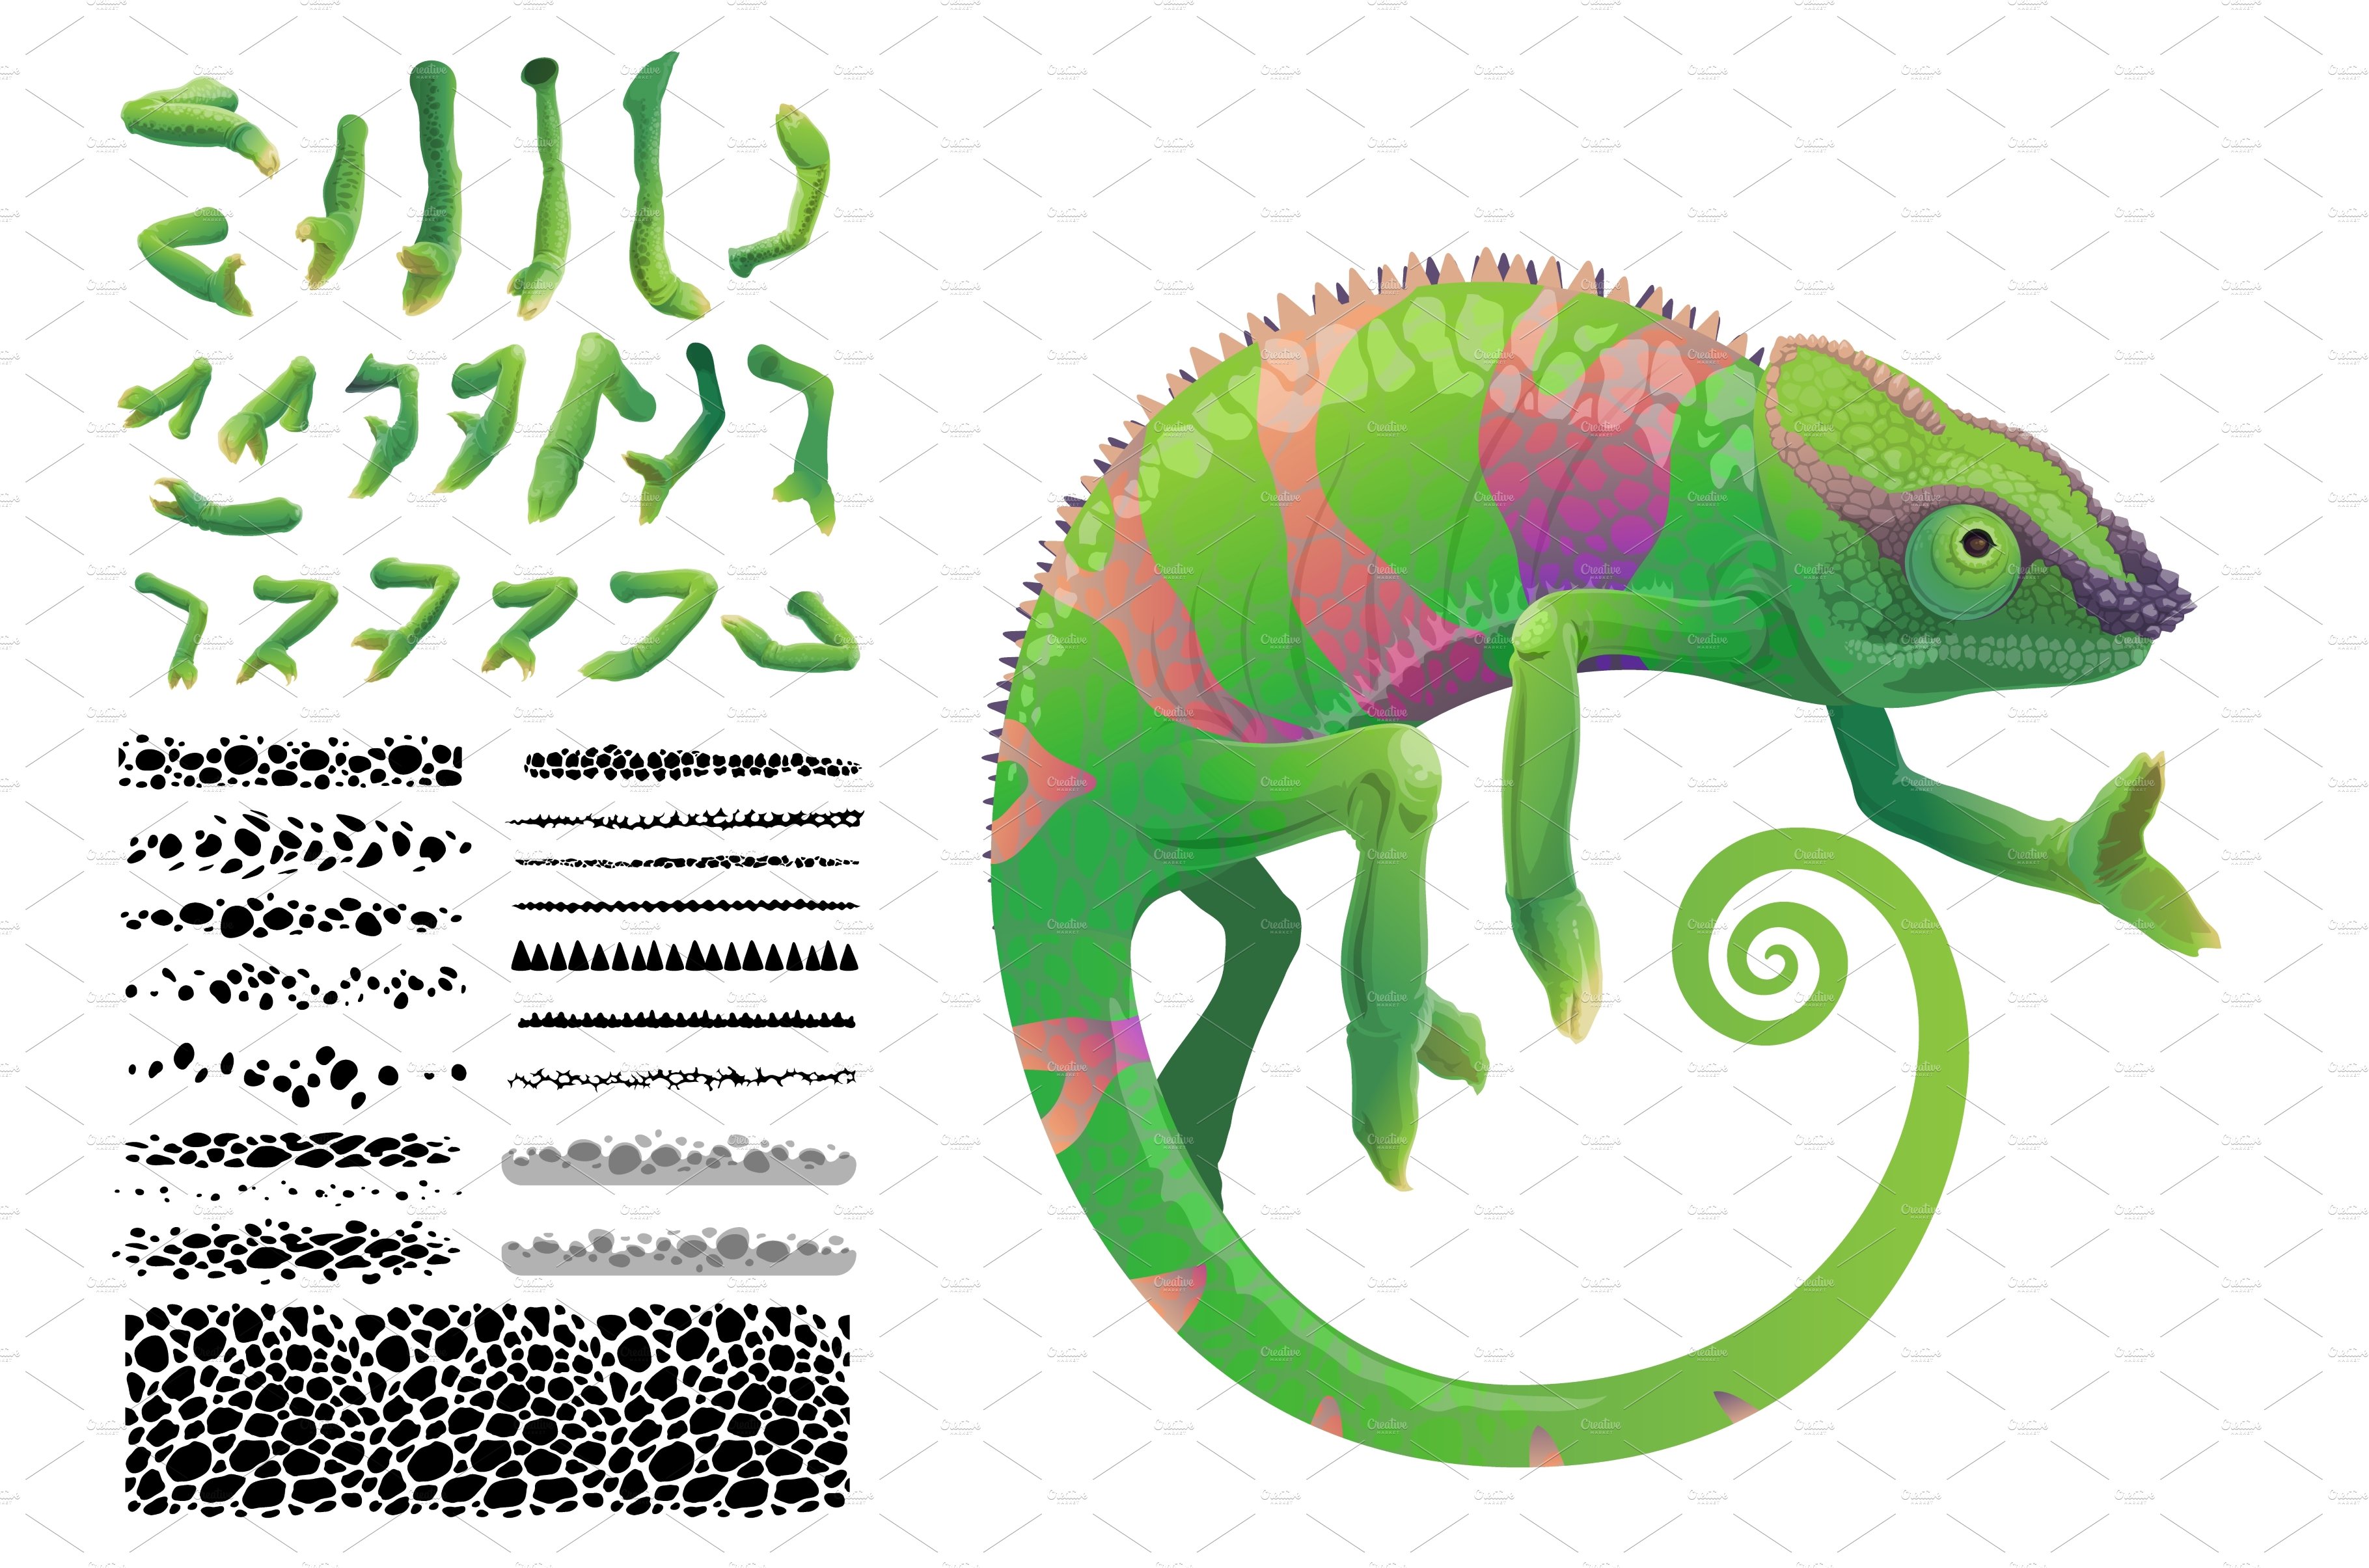 Green chameleon lizard reptile cover image.